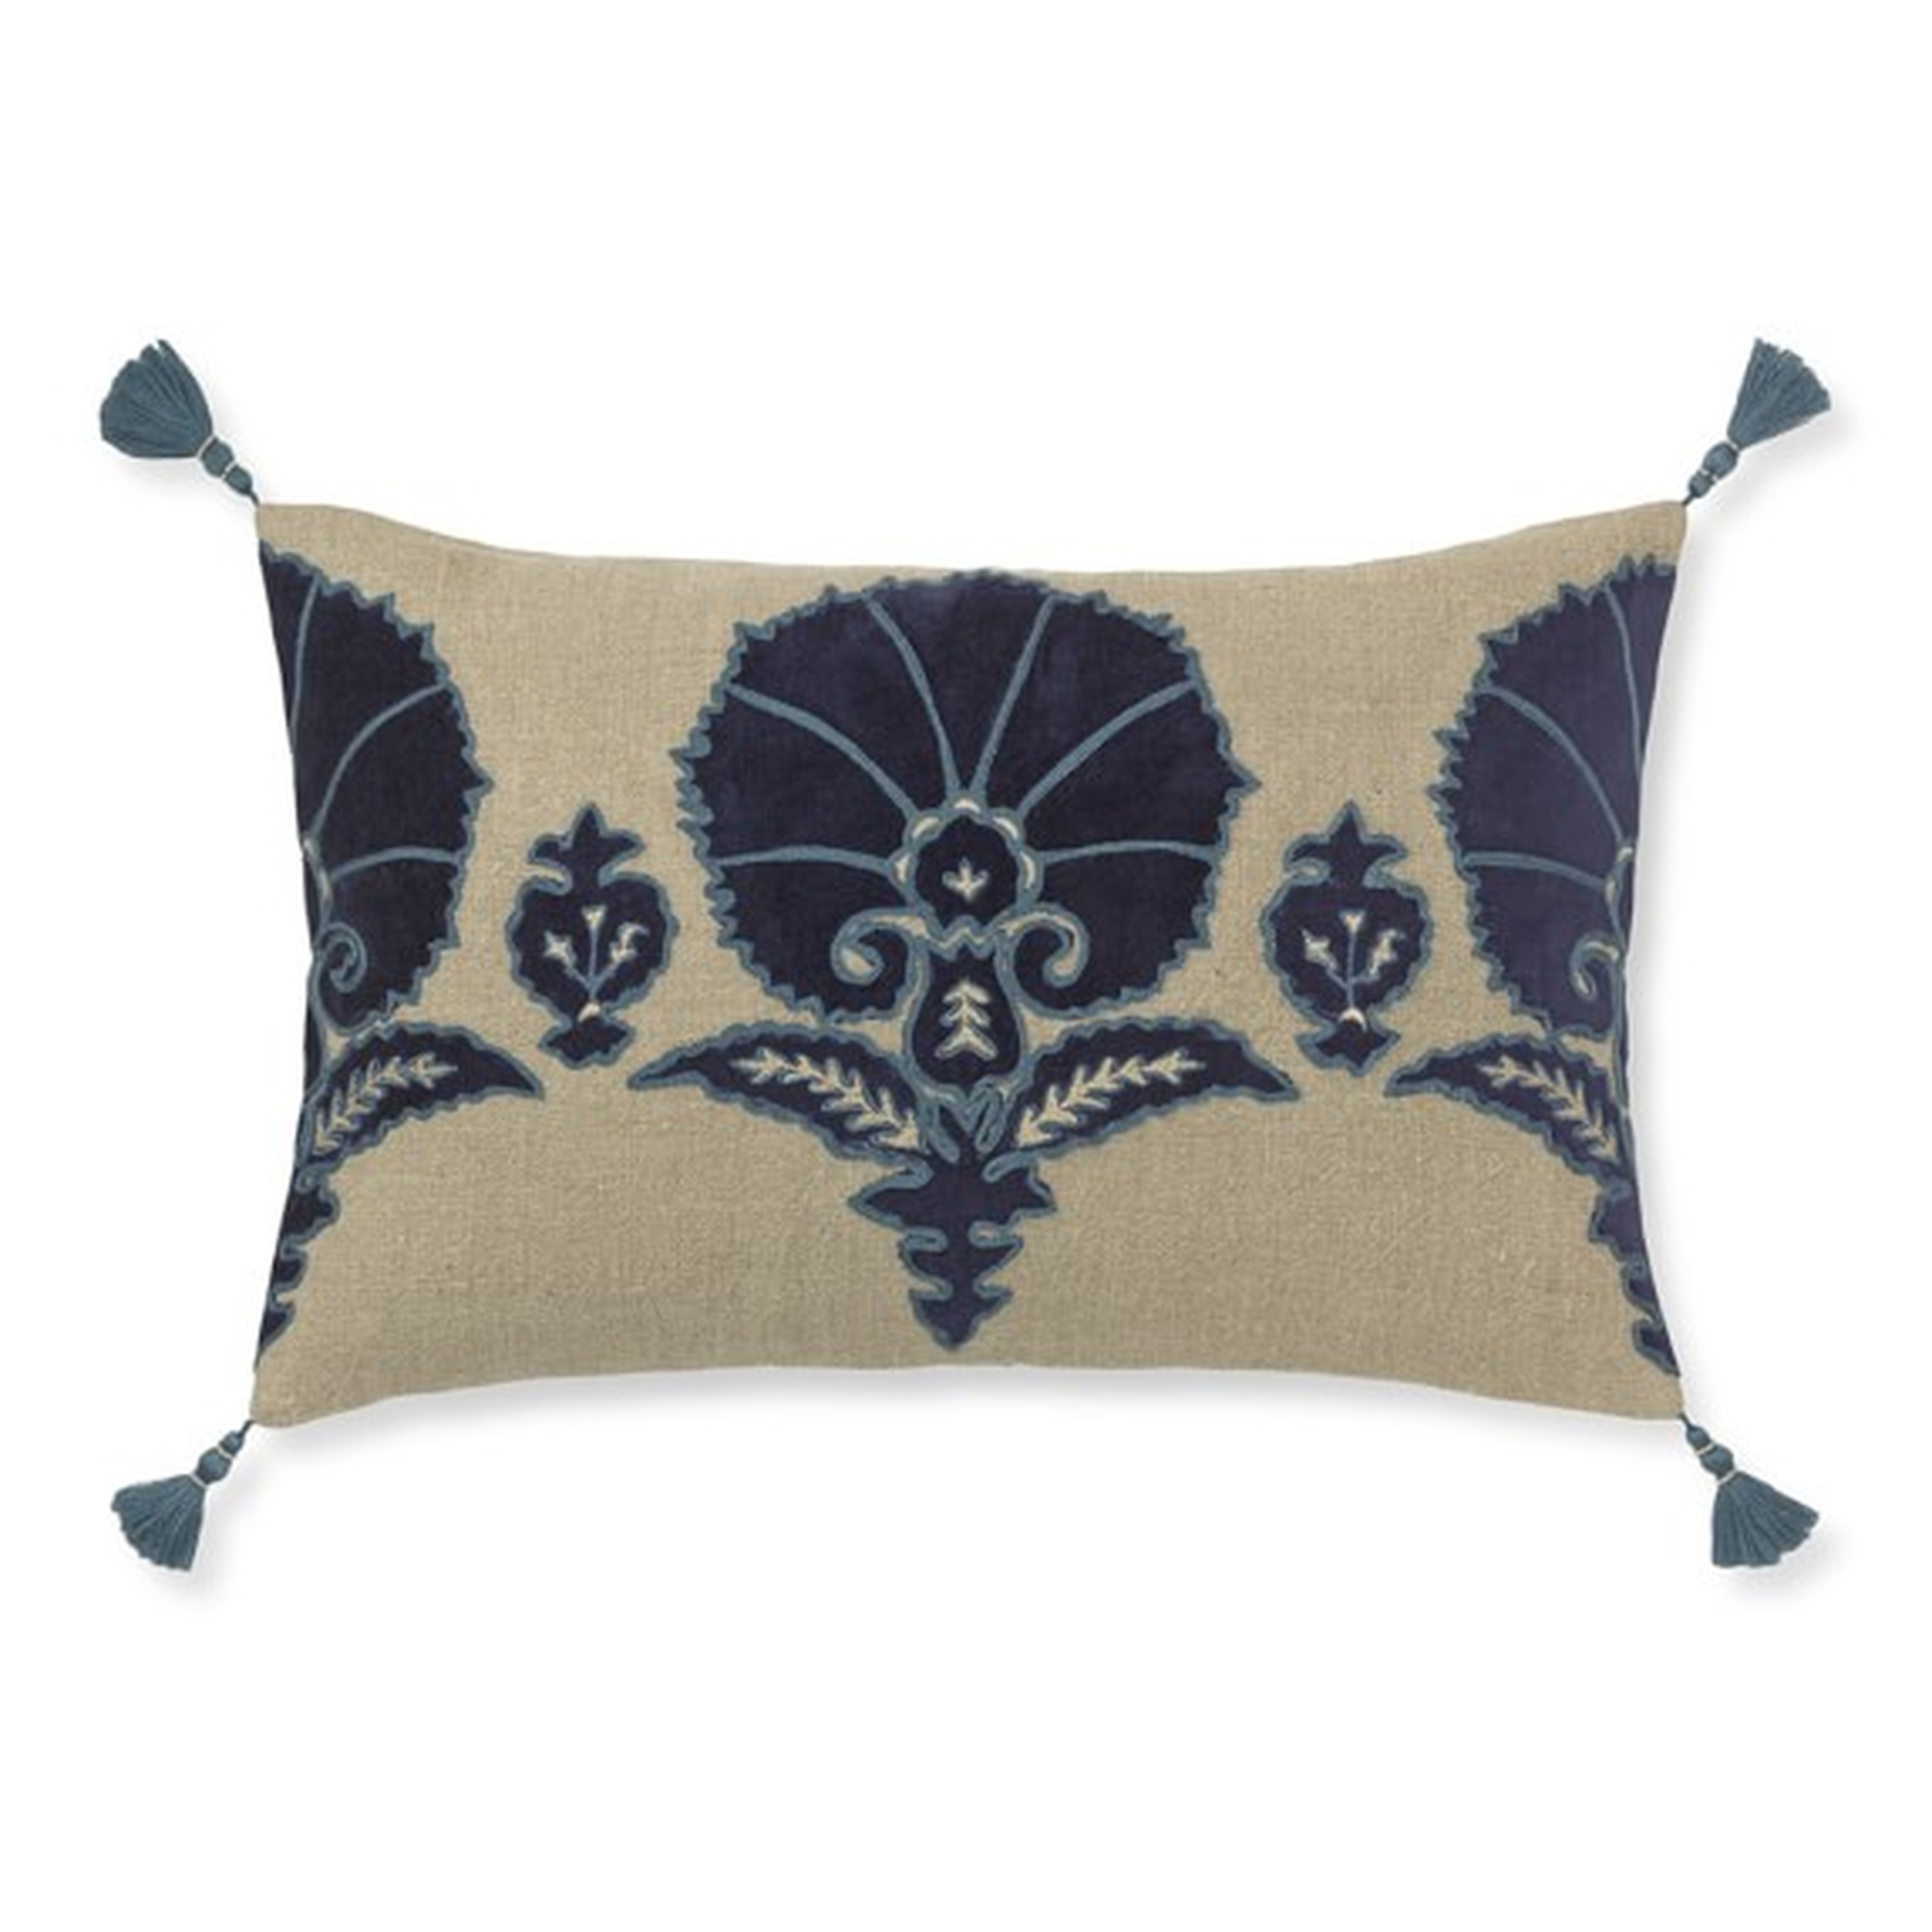 Ottoman Floral Velvet Applique Pillow Cover - 14x22, Blue - No Insert - Williams Sonoma Home